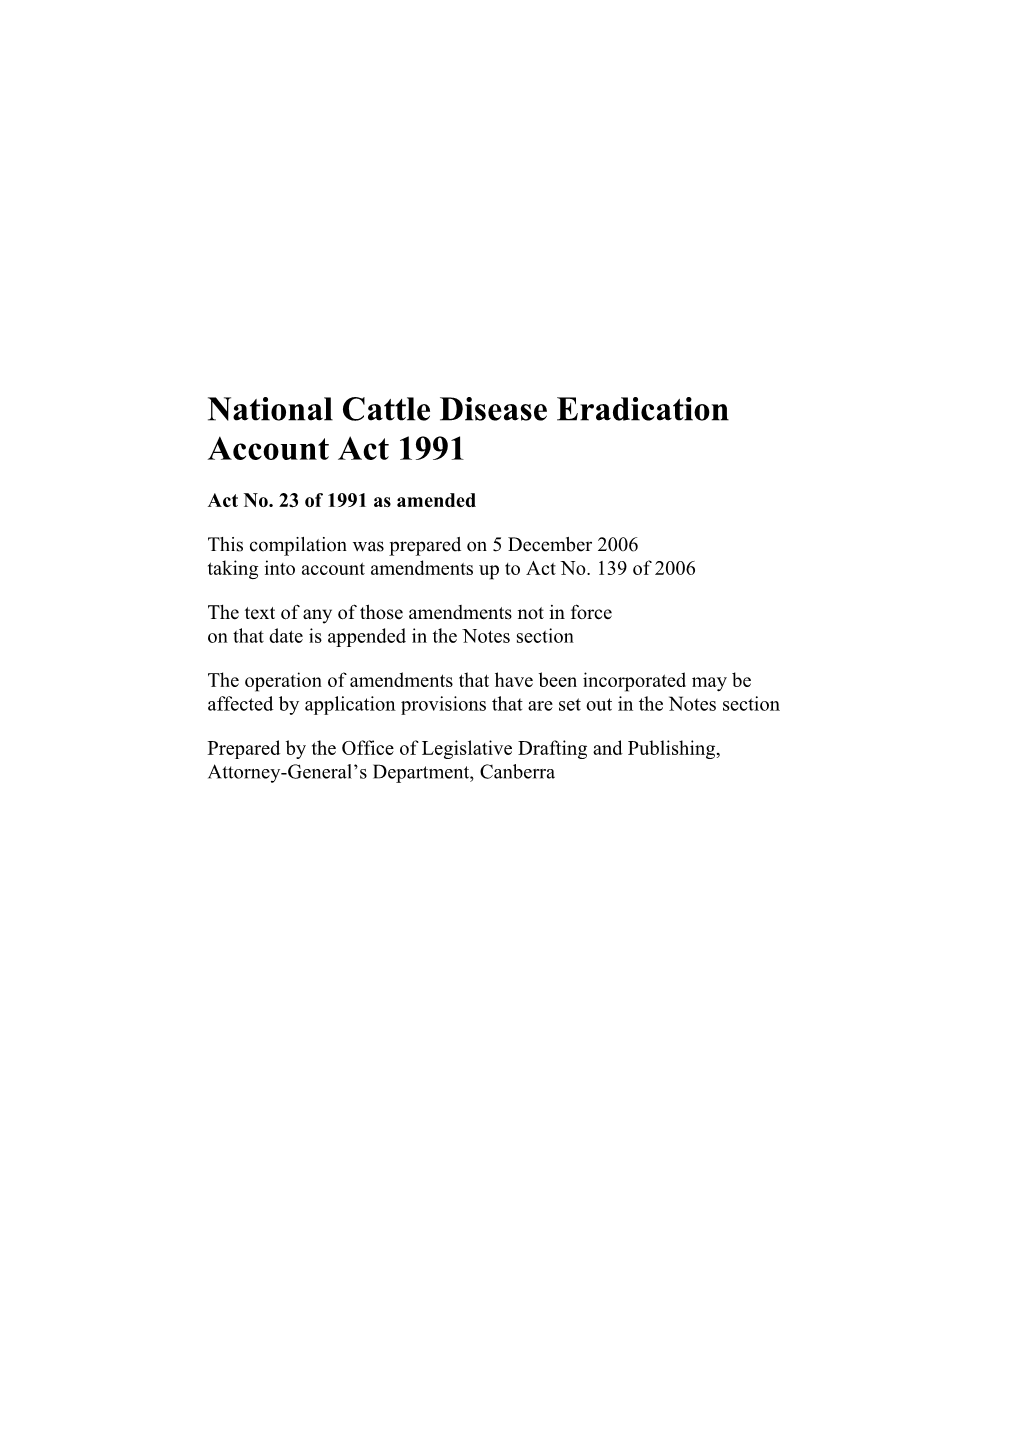 National Cattle Disease Eradication Account Act 1991